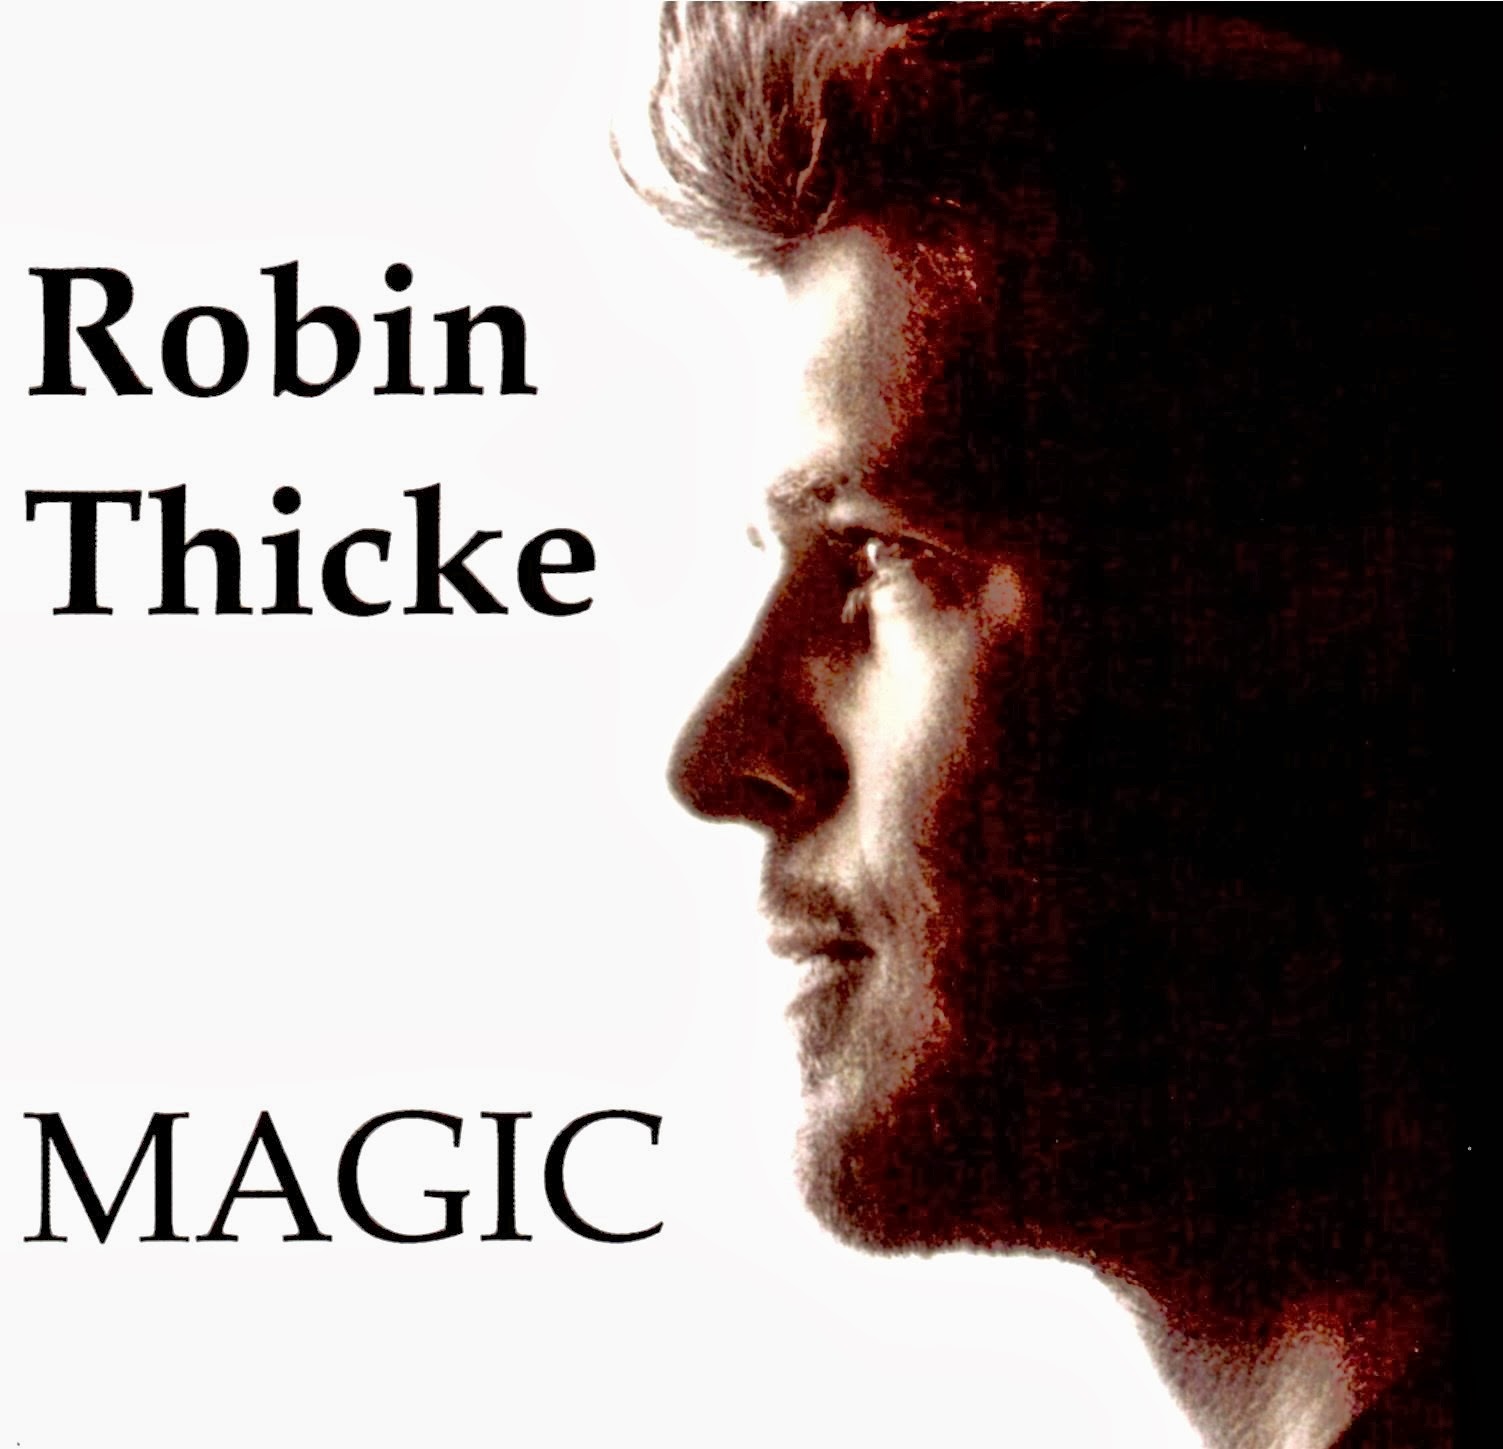 Robin thicke magic lyrics